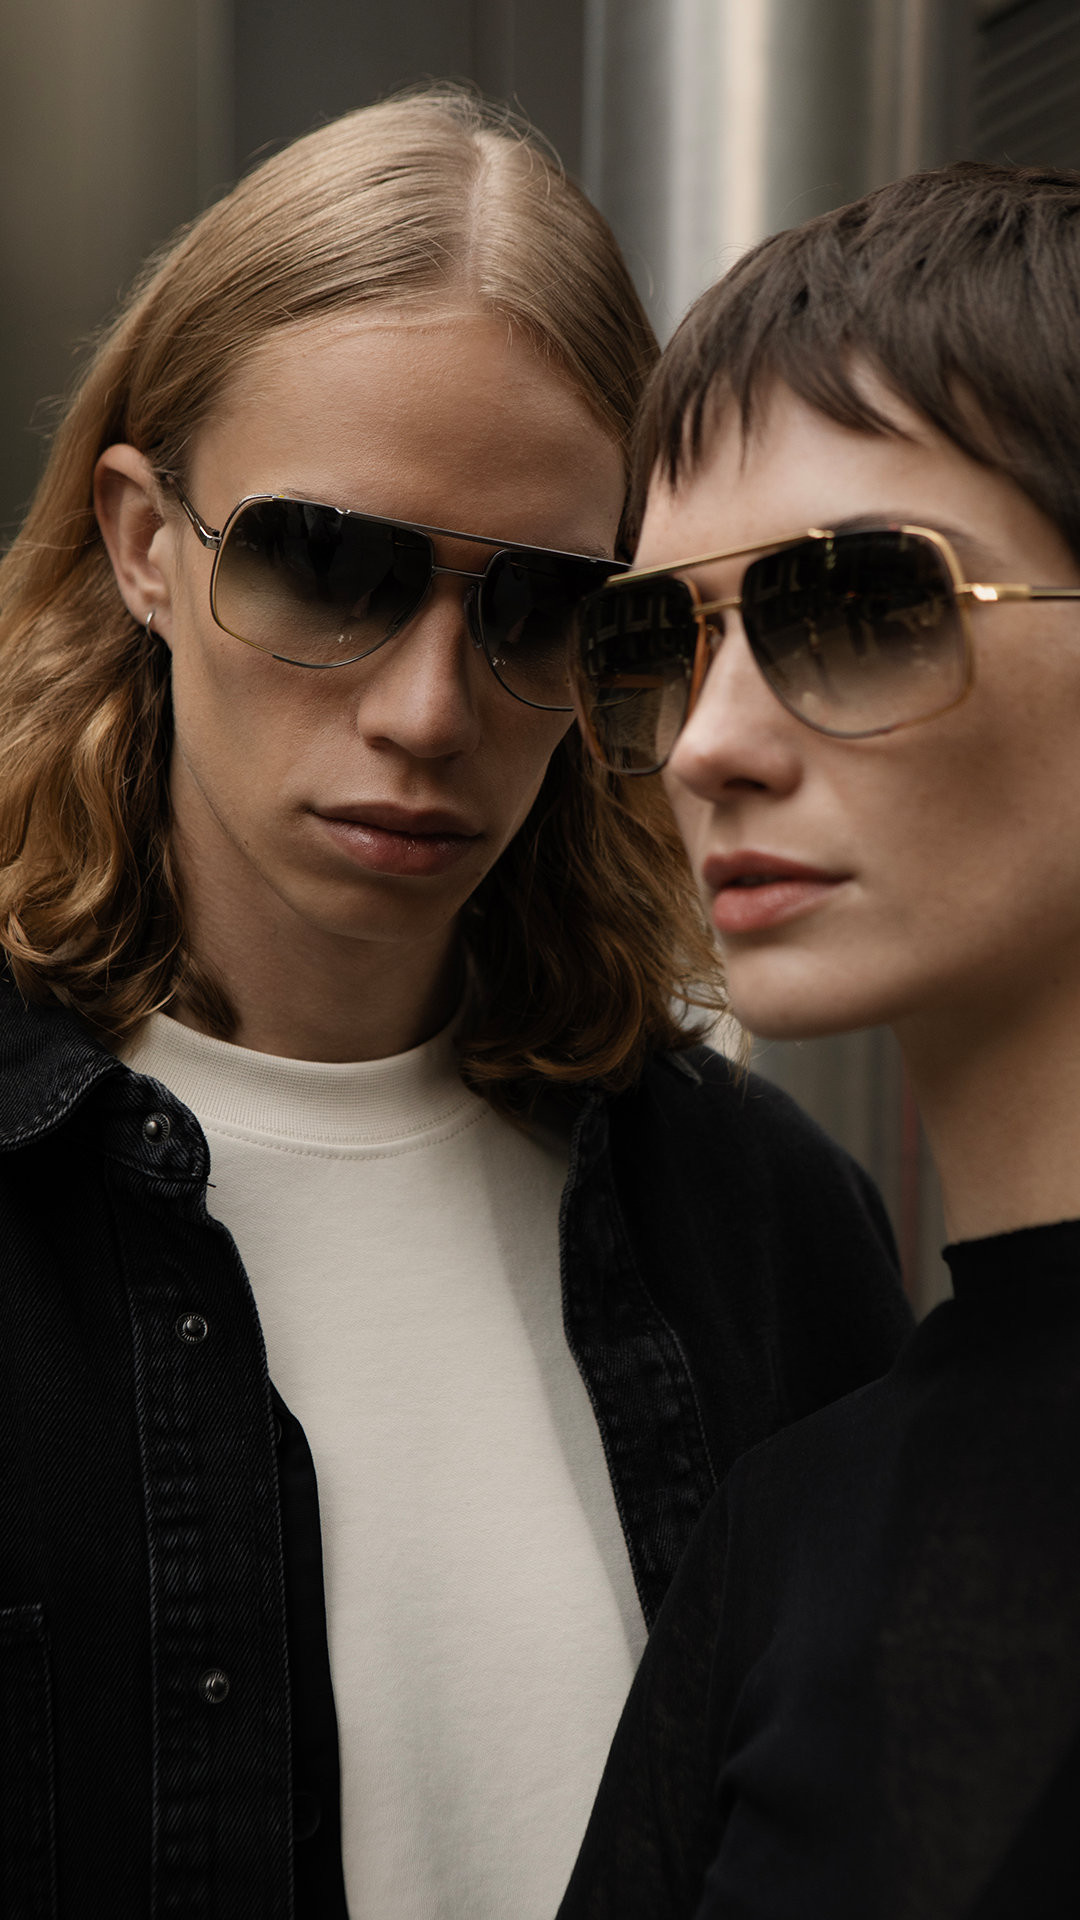 Louis Vuitton Men's Sunglasses for sale in Vancouver, British